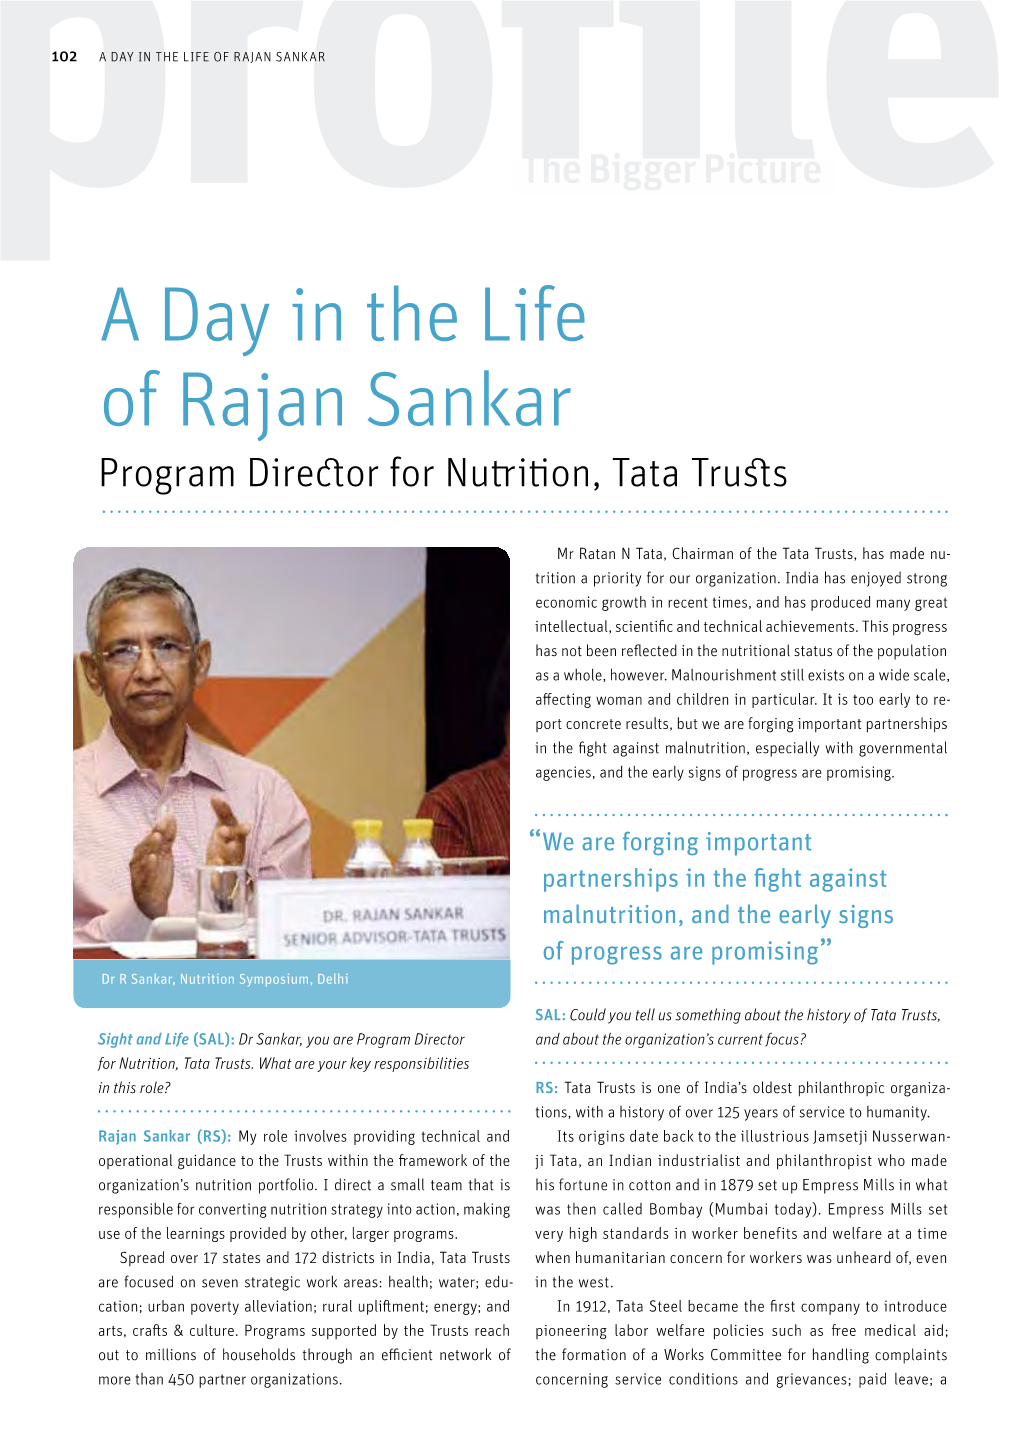 A Day in the Life of Rajan Sankar